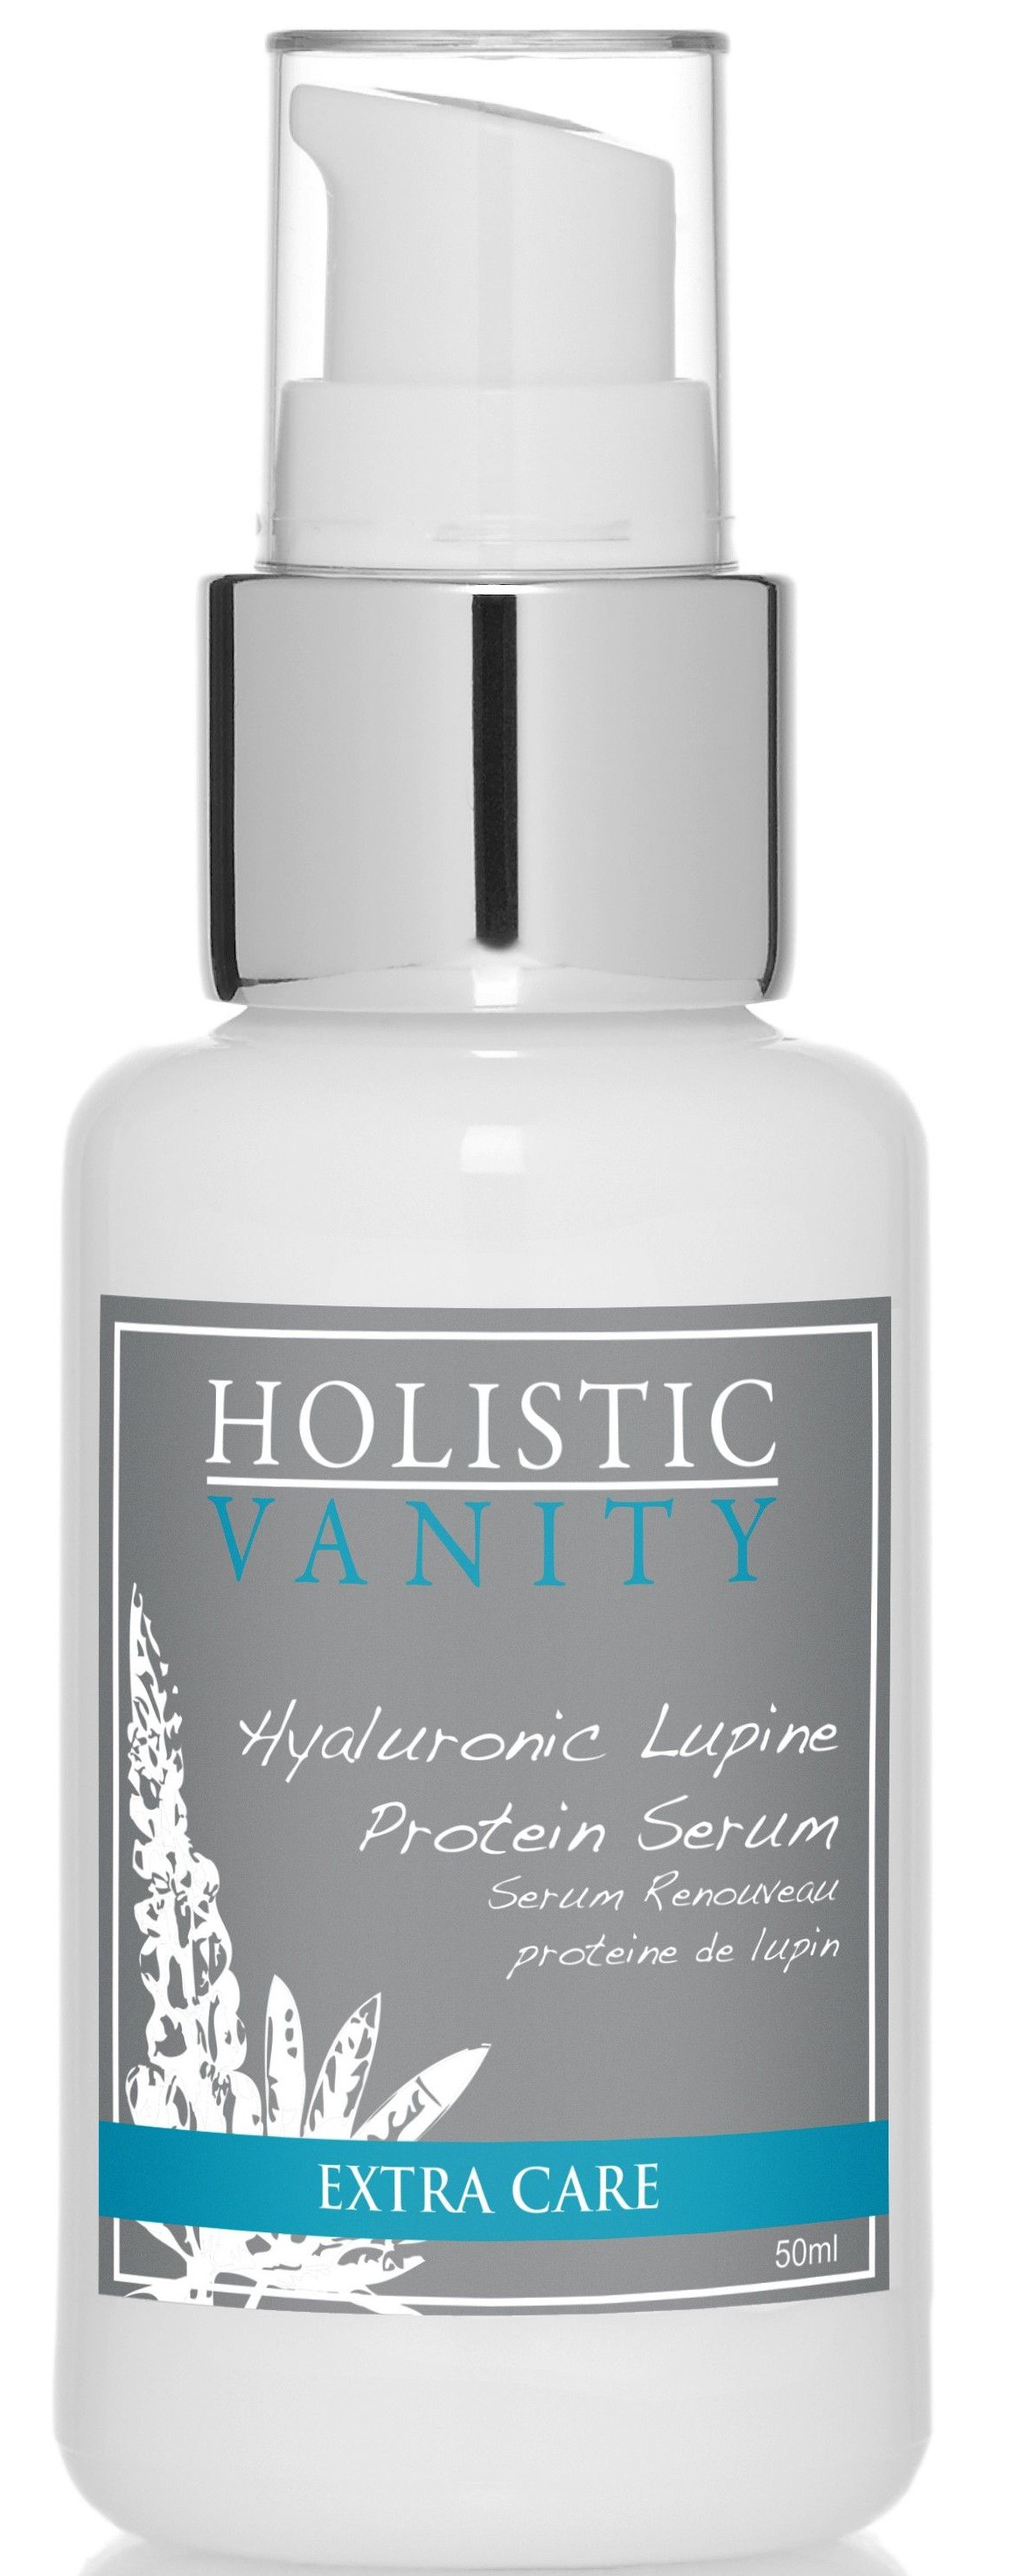 Holistic Vanity Hyaluronic Lupine Protein Serum